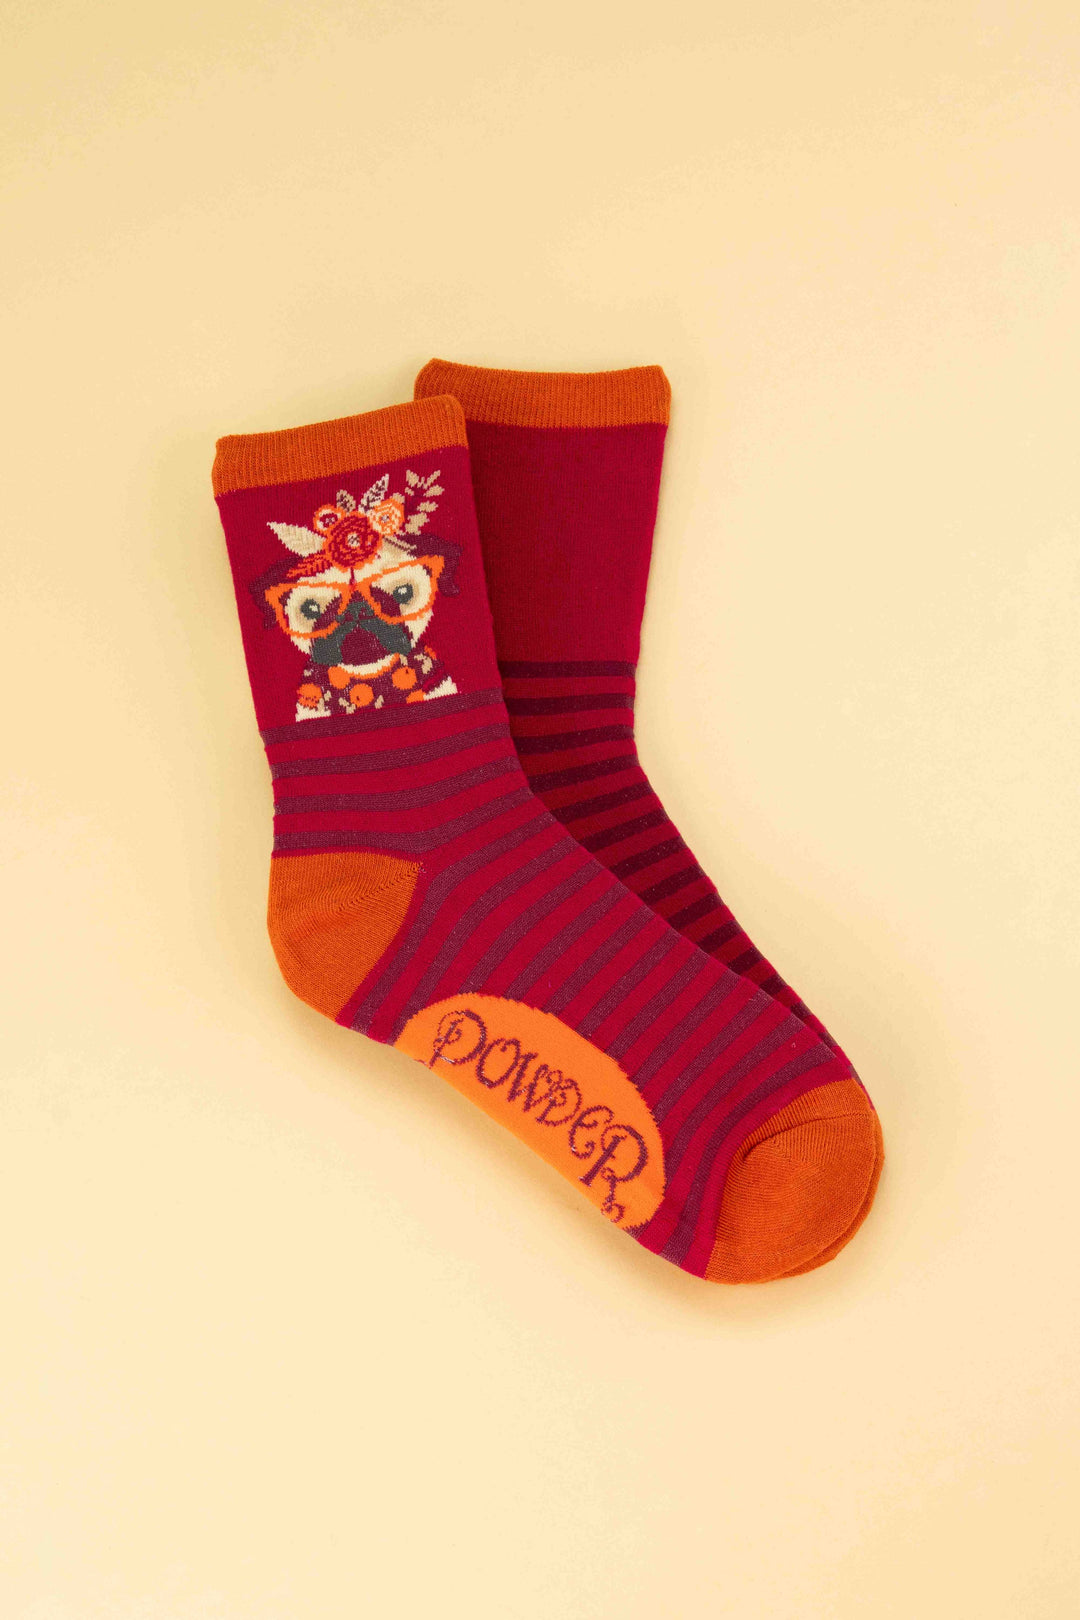 Powder Design inc - Ladies Ankle Socks Floral Pug